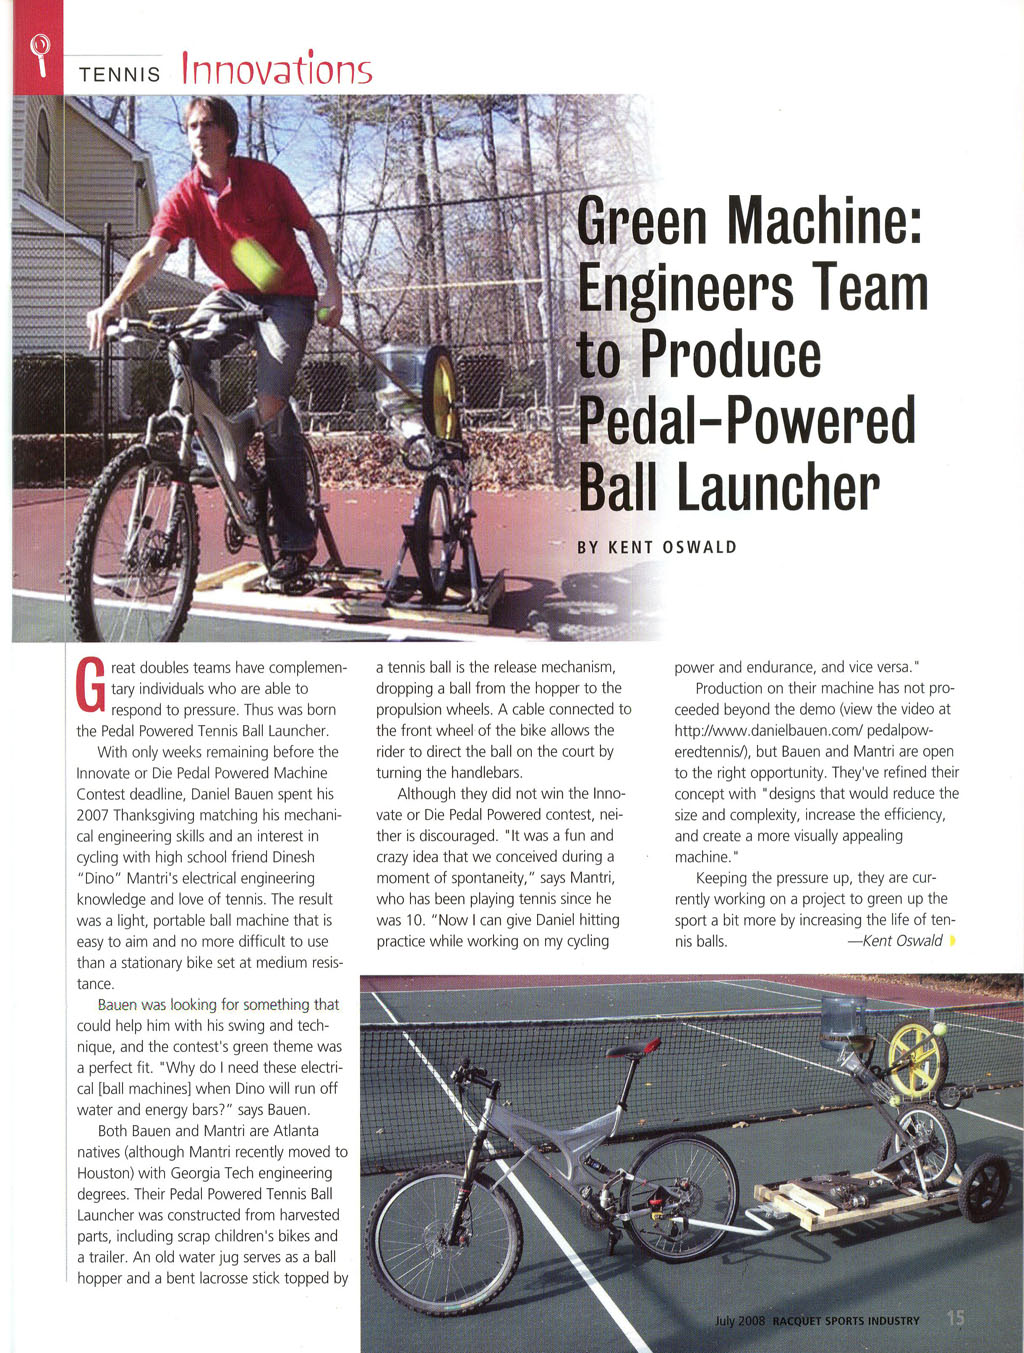 RSI Magazine pedal powered tennis ball launcher